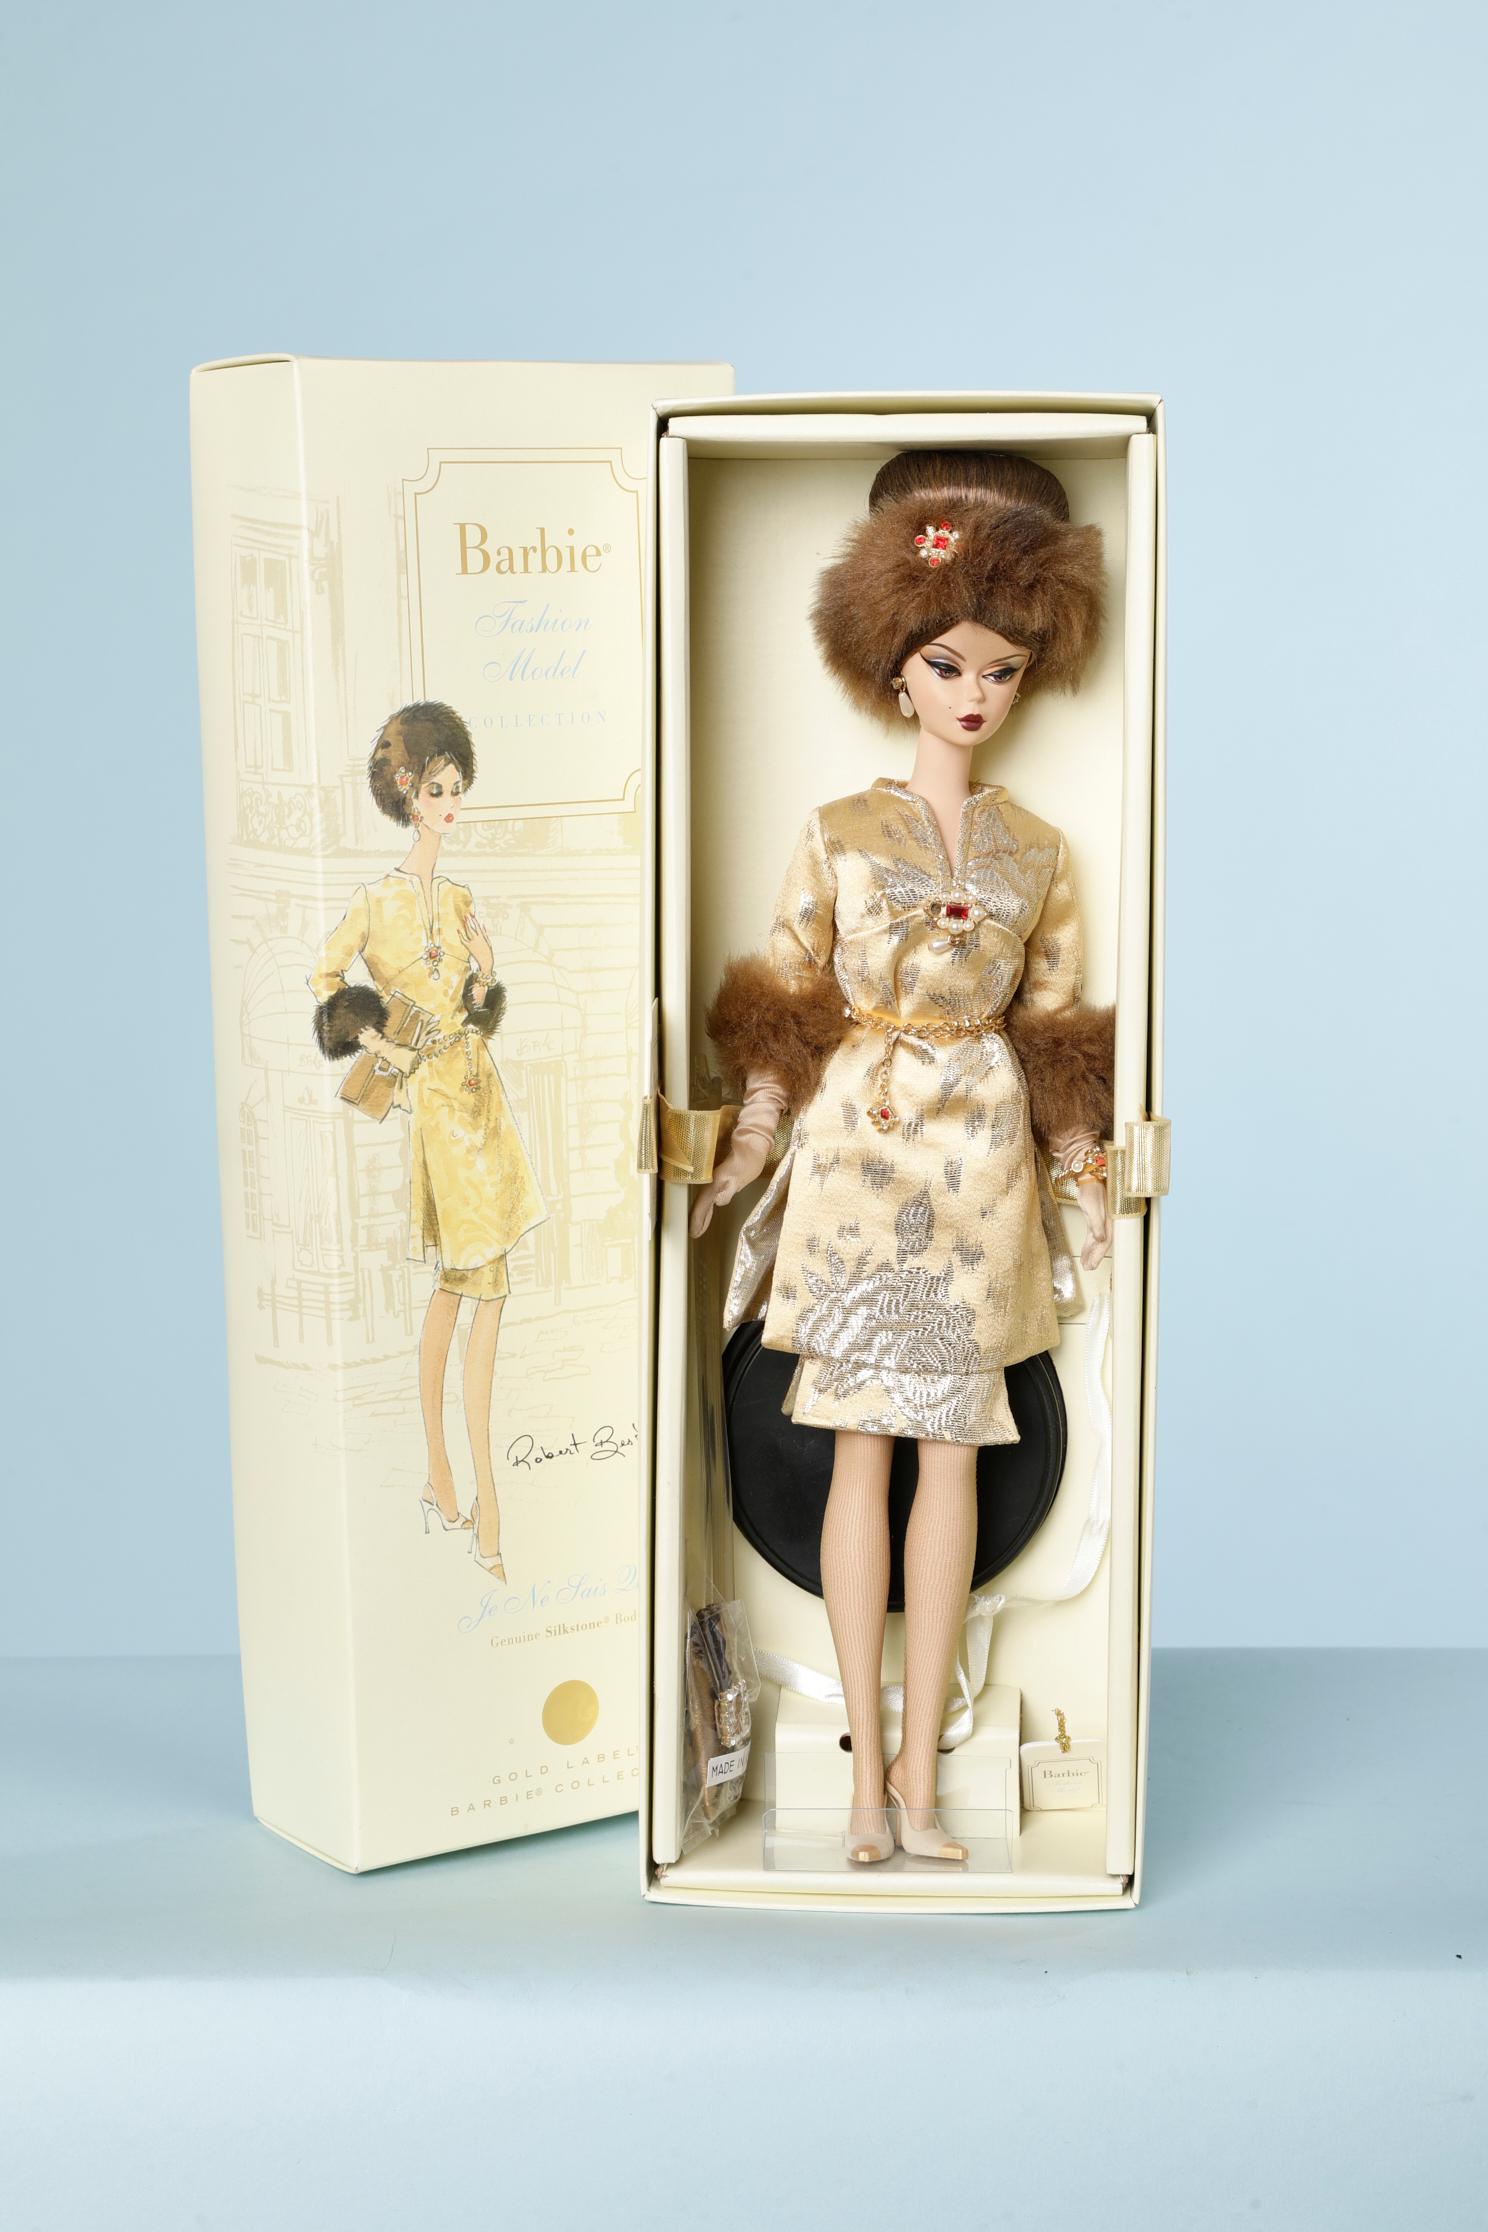 Barbie Fashion Model / Gold Label / "Je ne sais quoi" For Sale at 1stDibs